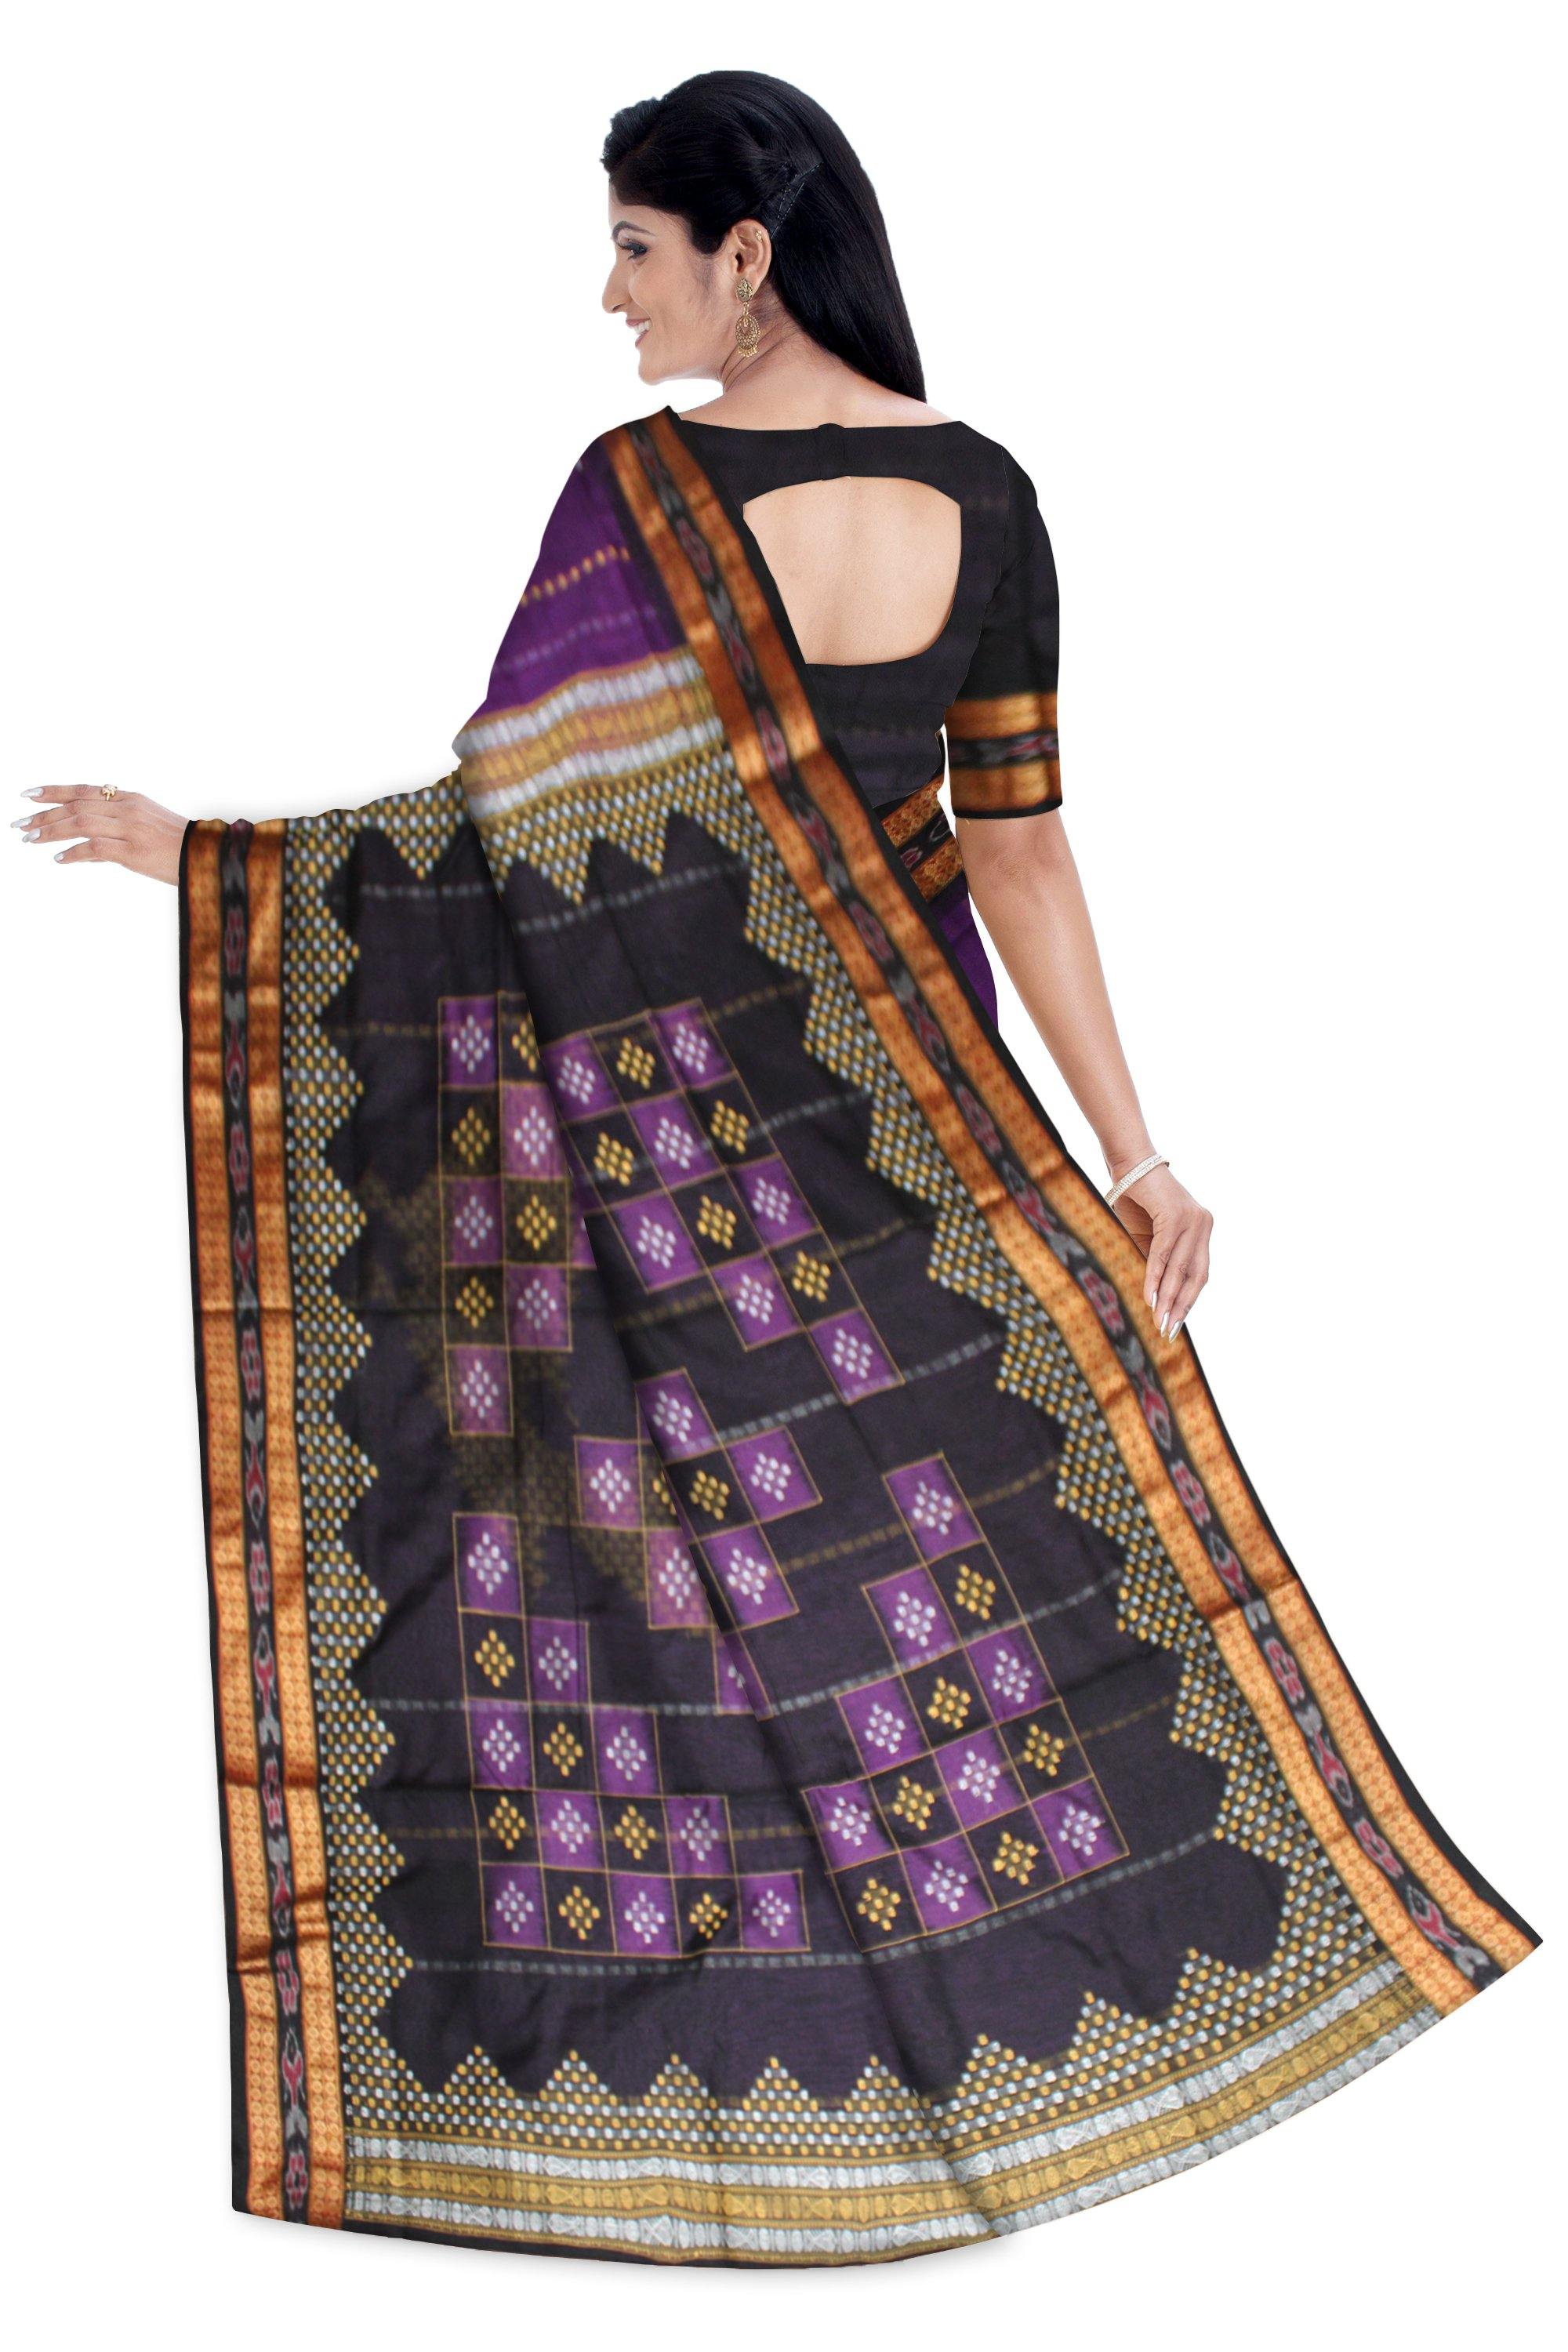 Sambalpuri Handwoven Bomkei Cotton saree in Violate Color With Blouse Piece - Koshali Arts & Crafts Enterprise